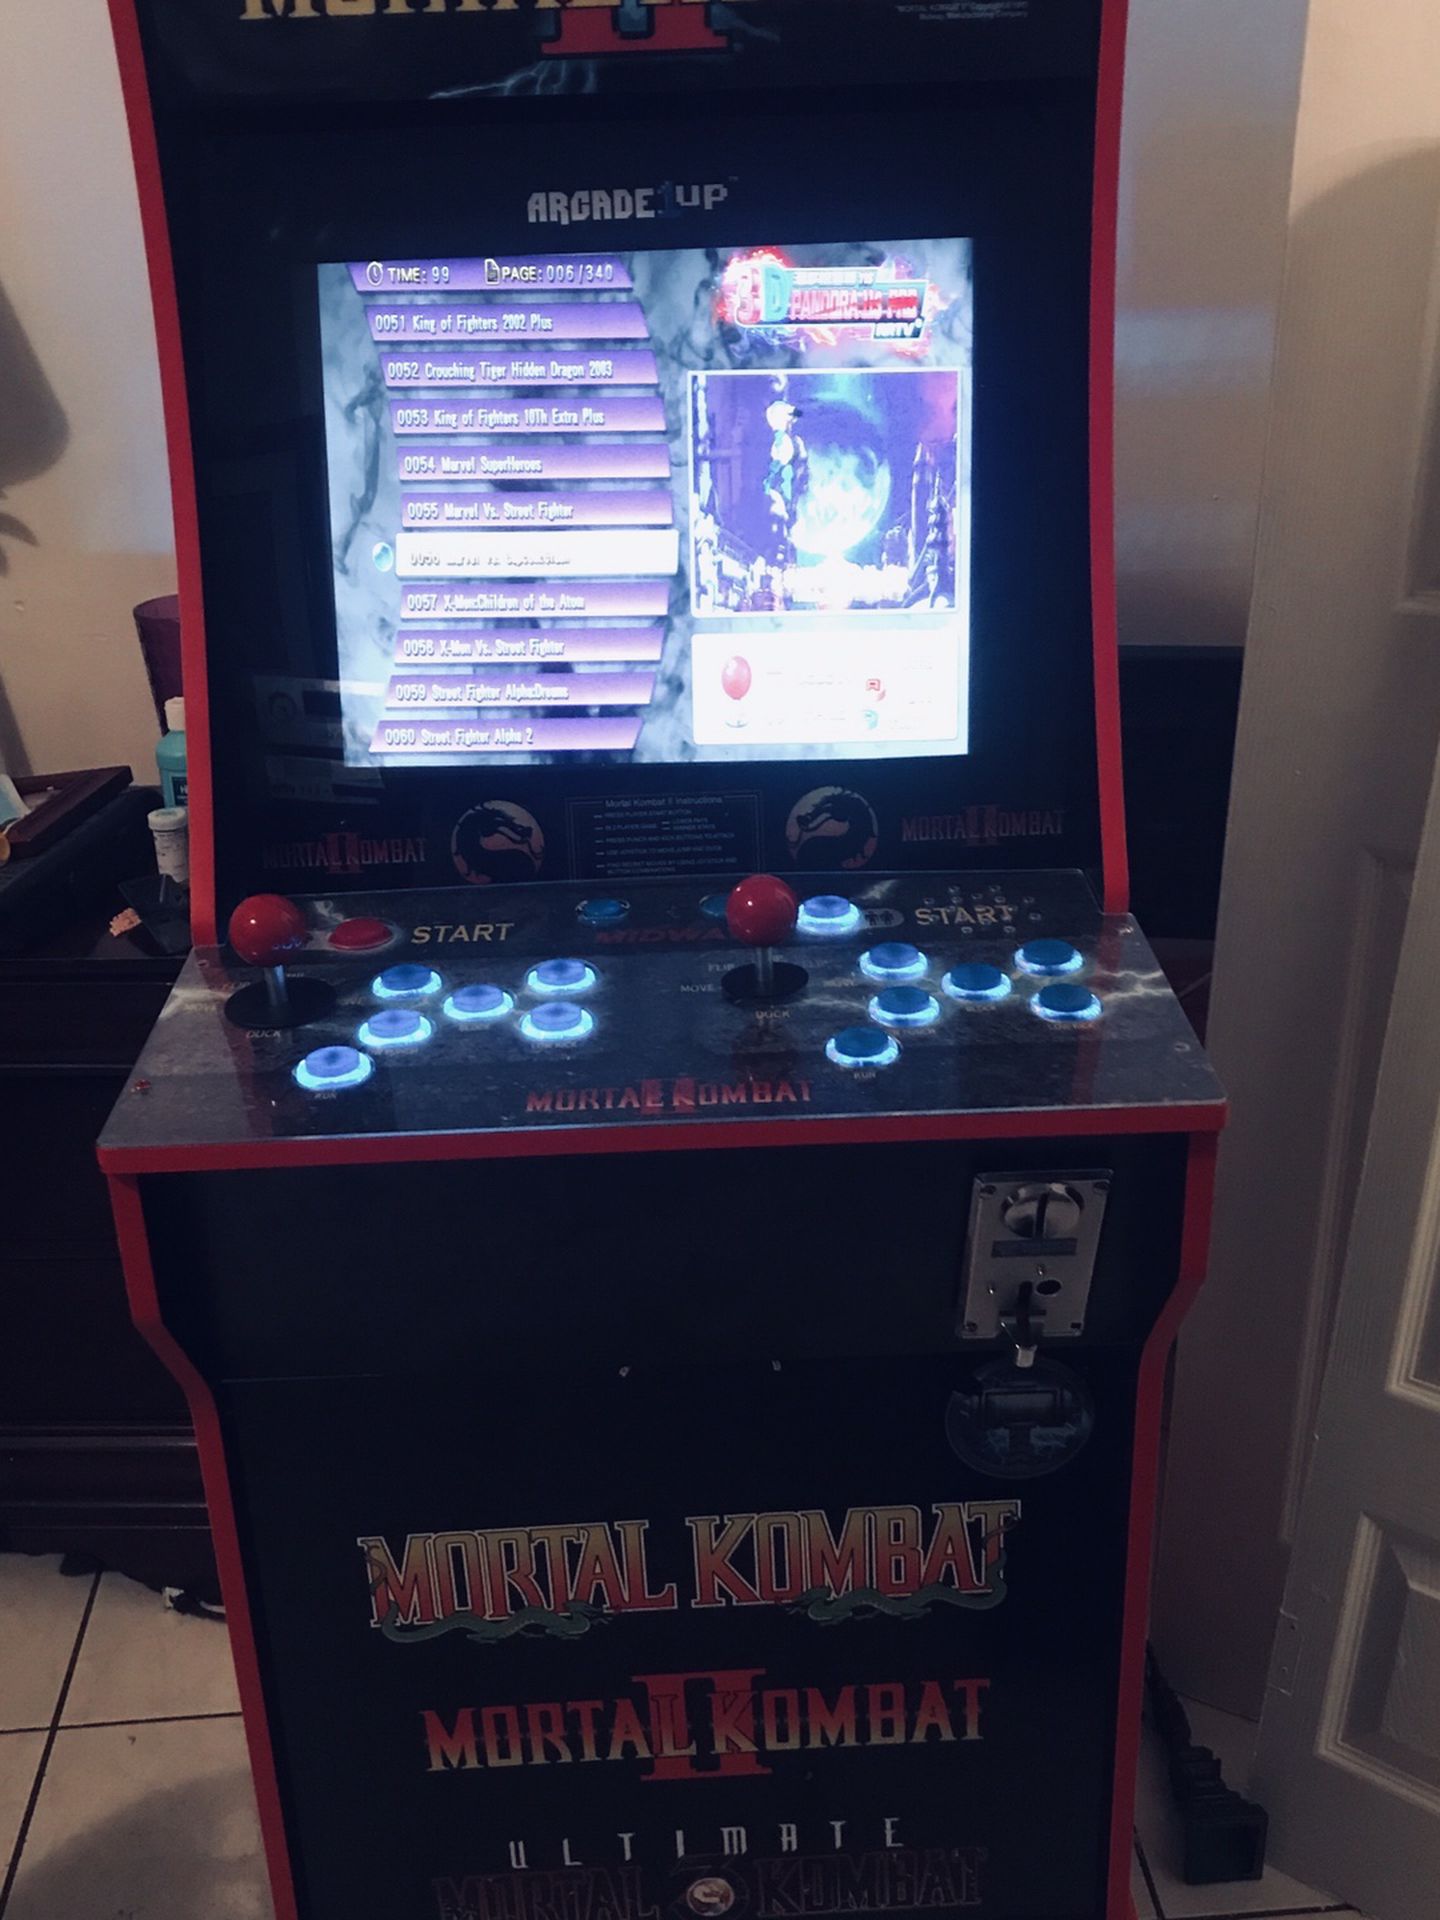 Mortal Kombat cab with riser 3399 games